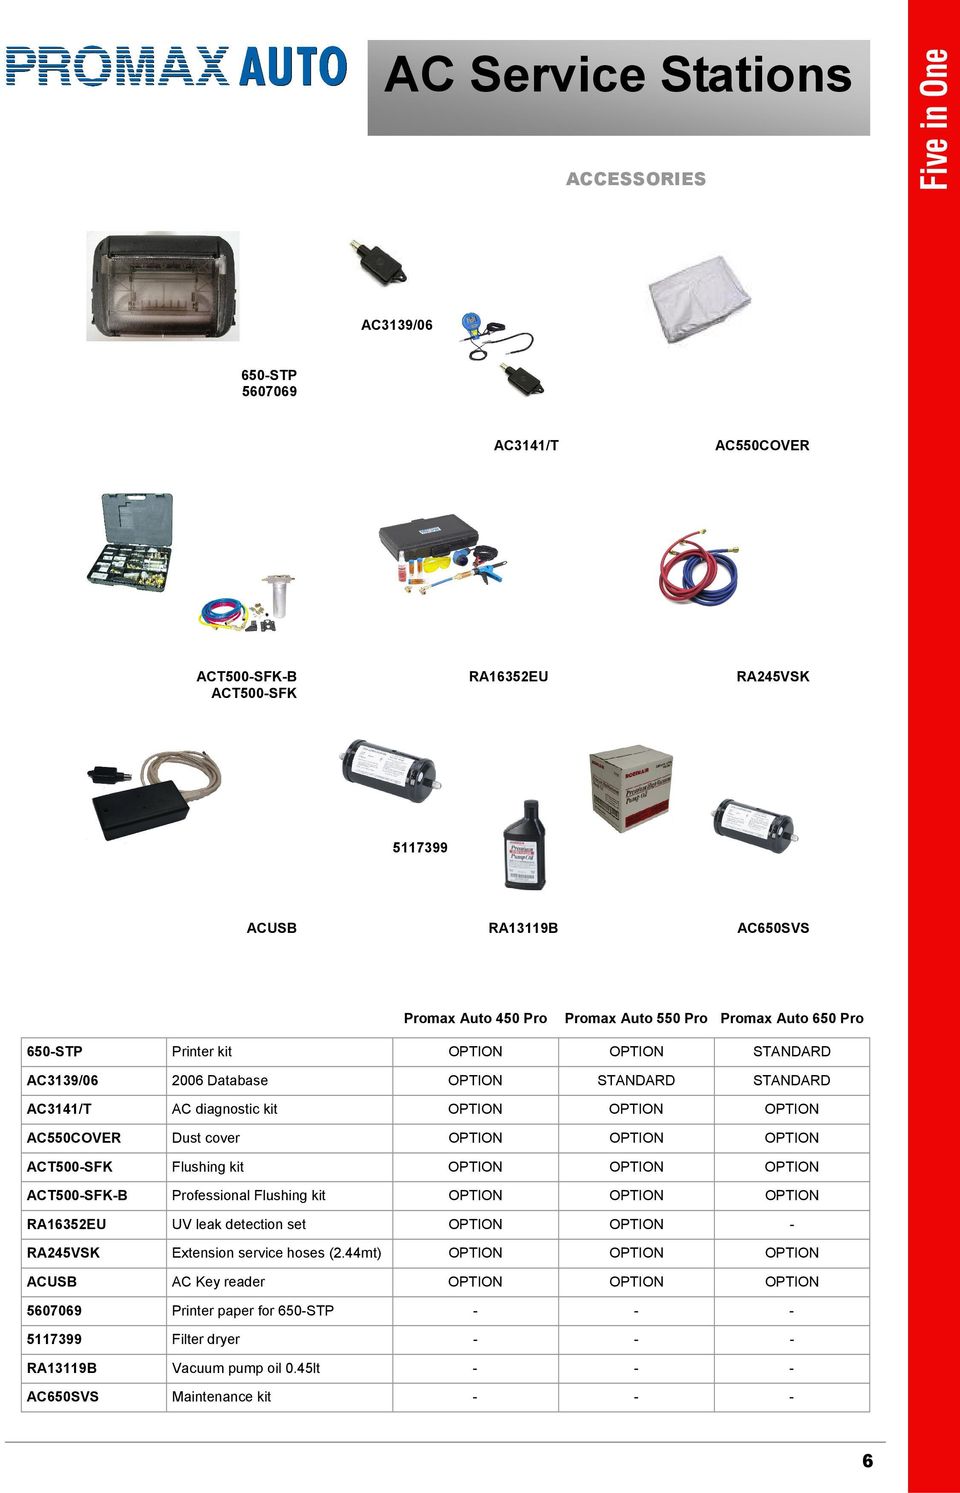 diagnostic kit AC550COVER Dust cover ACT500SFK Flushing kit ACT500SFKB Professional Flushing kit RA16352EU UV leak detection set RA245VSK